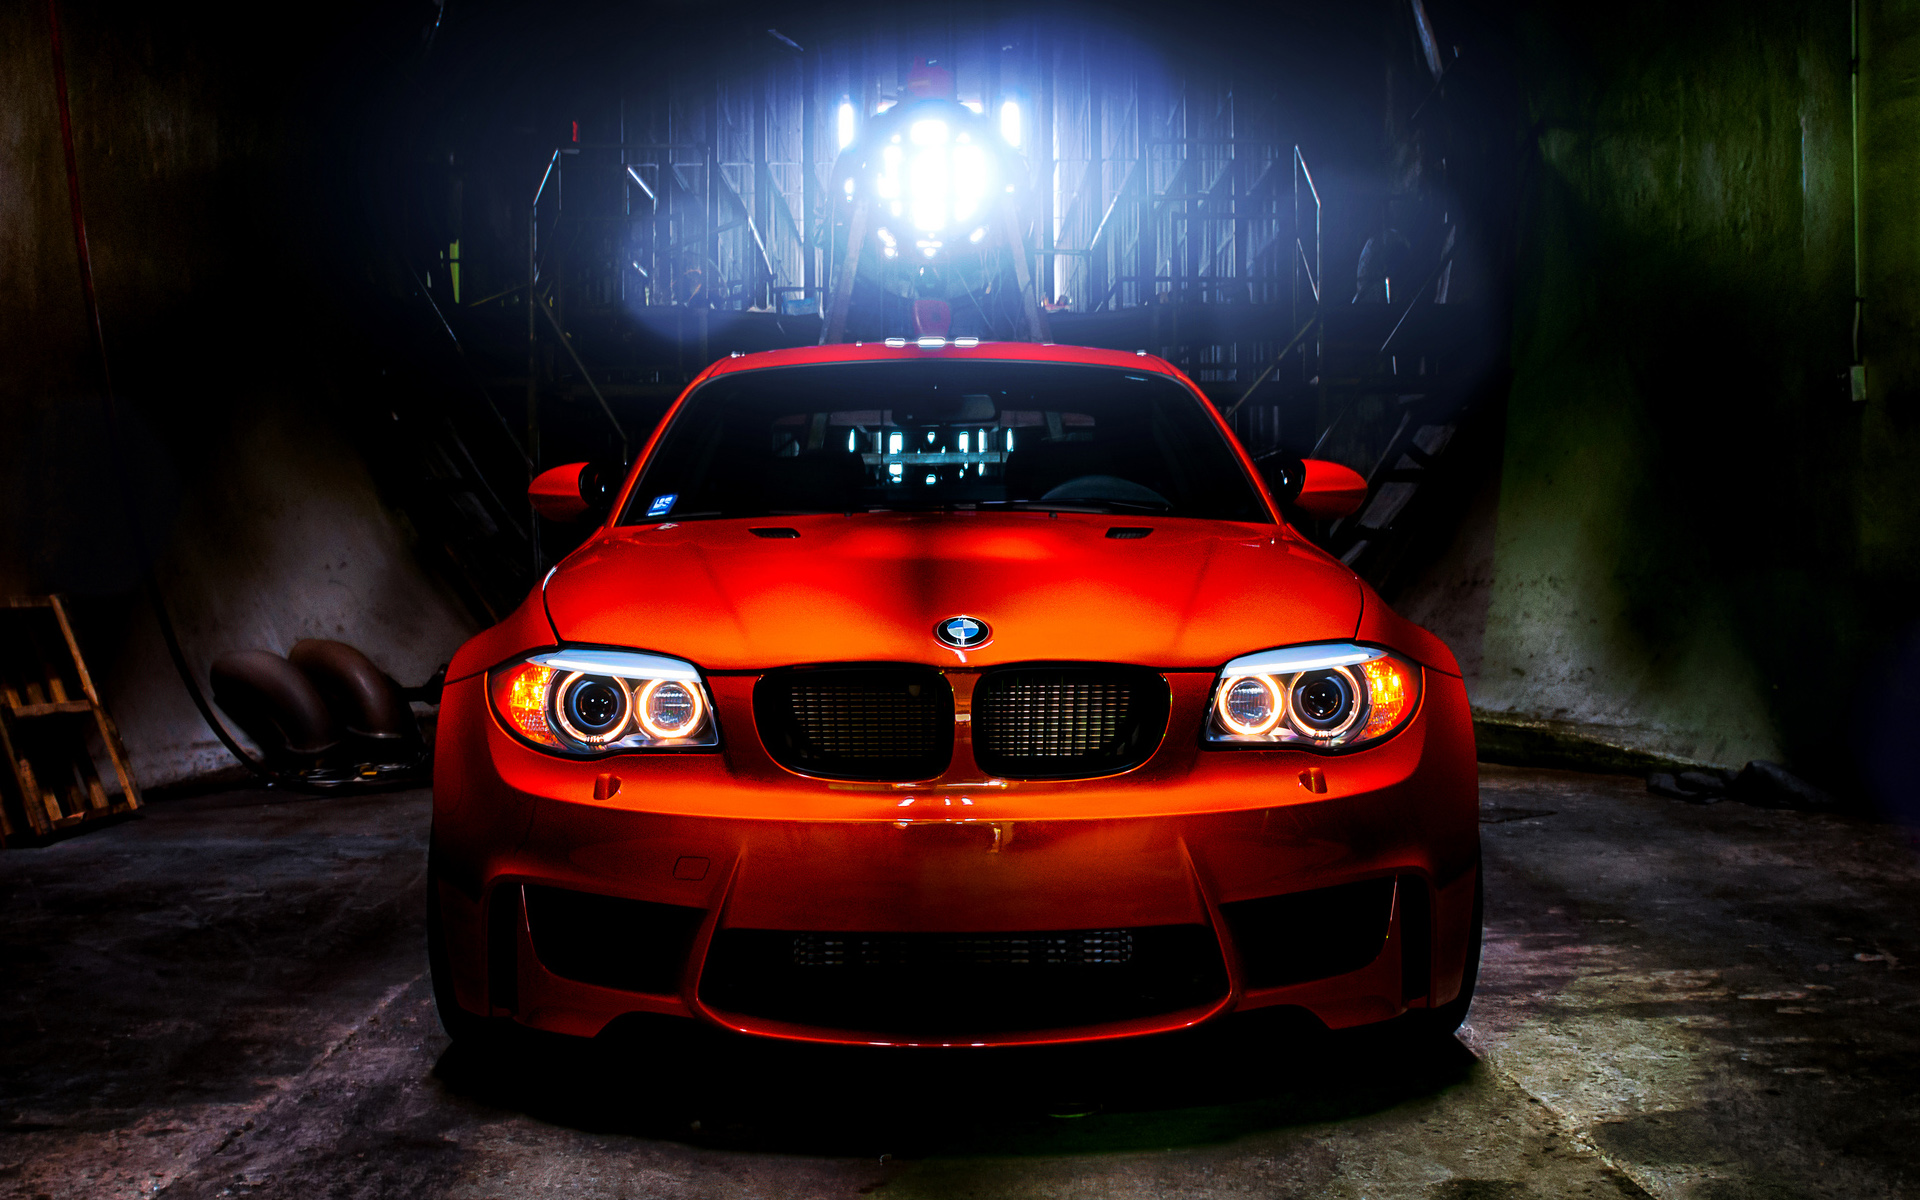 BMW 1M HDR Wallpaper | HD Car Wallpapers | ID #2966